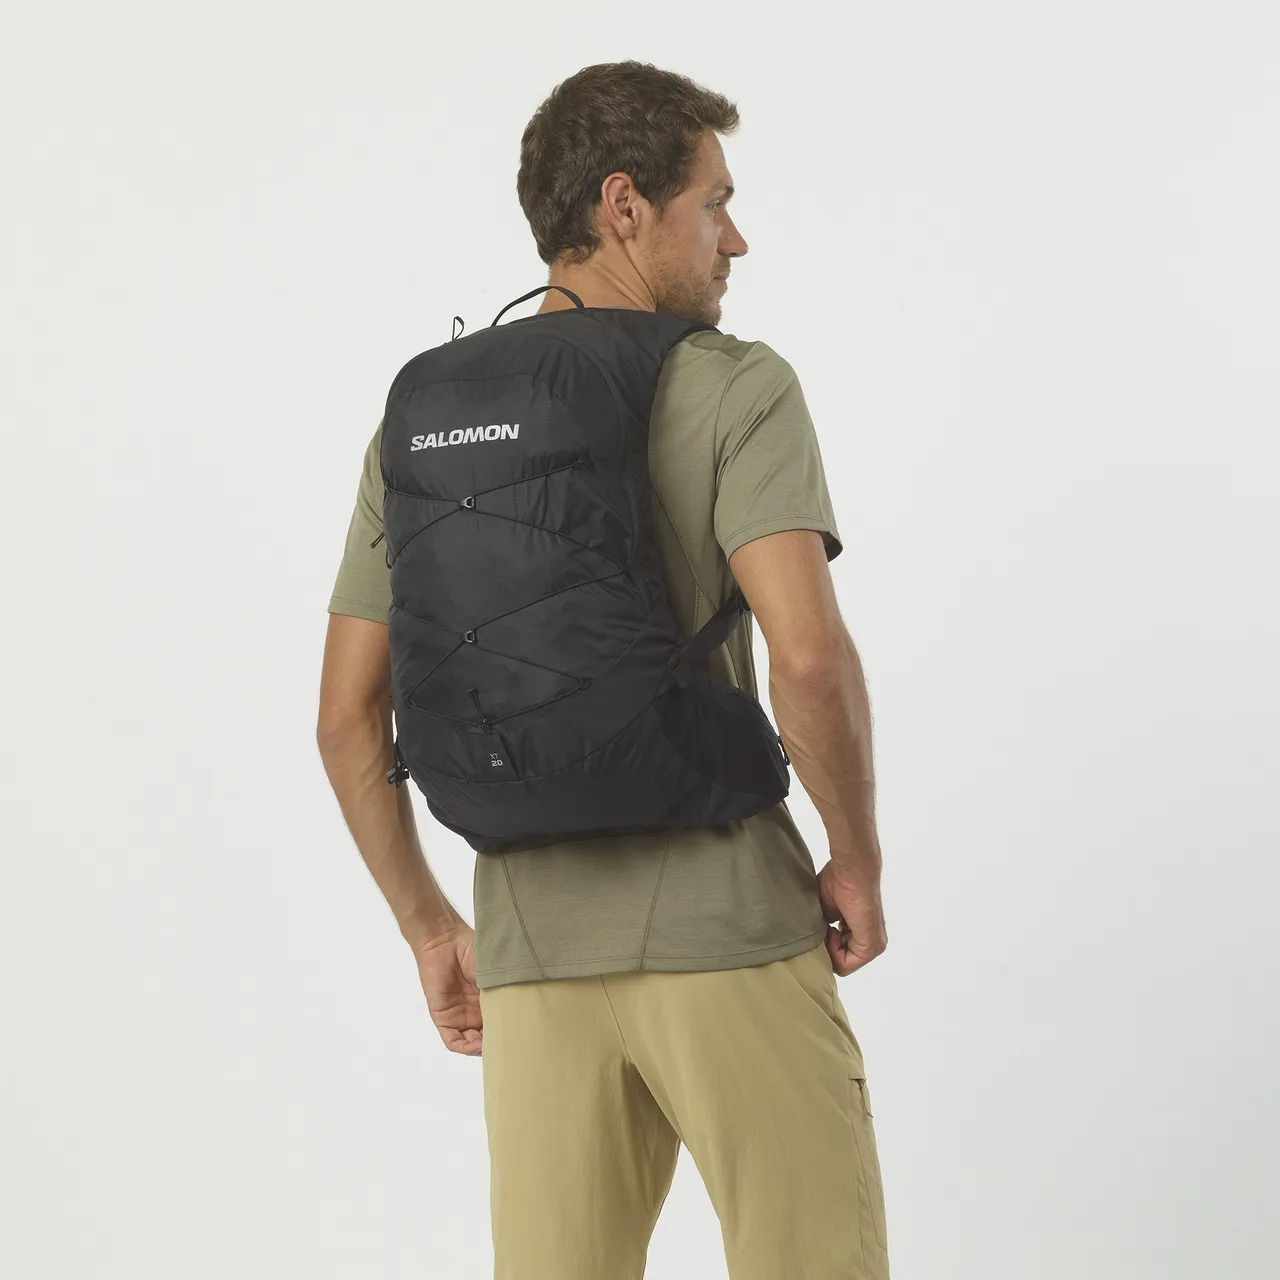 Salomon XT 20 Backpack